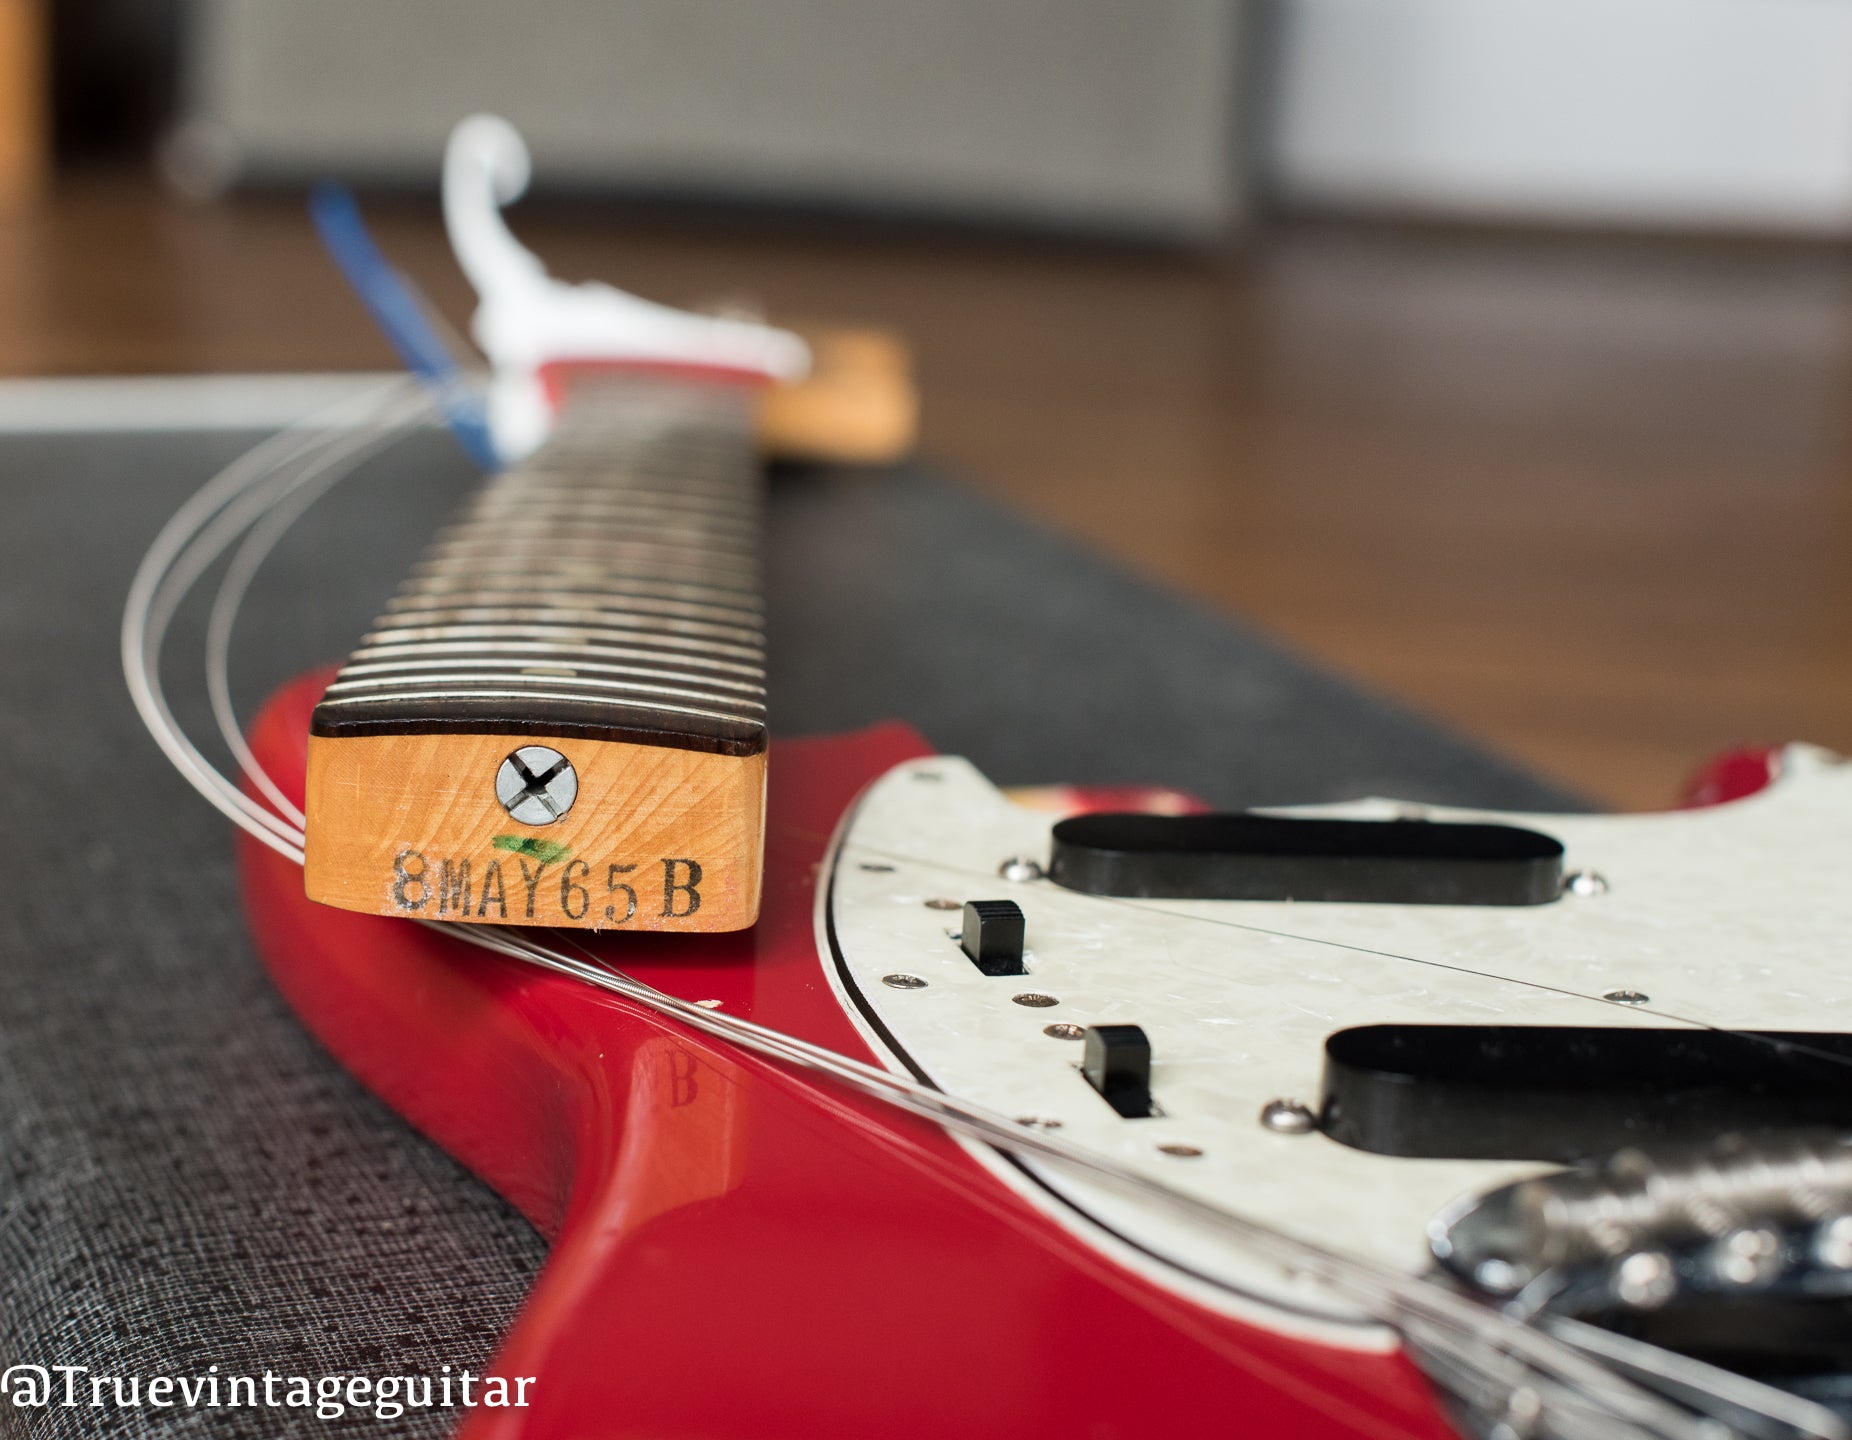 8May65B Fender Mustang neck heel date stamp